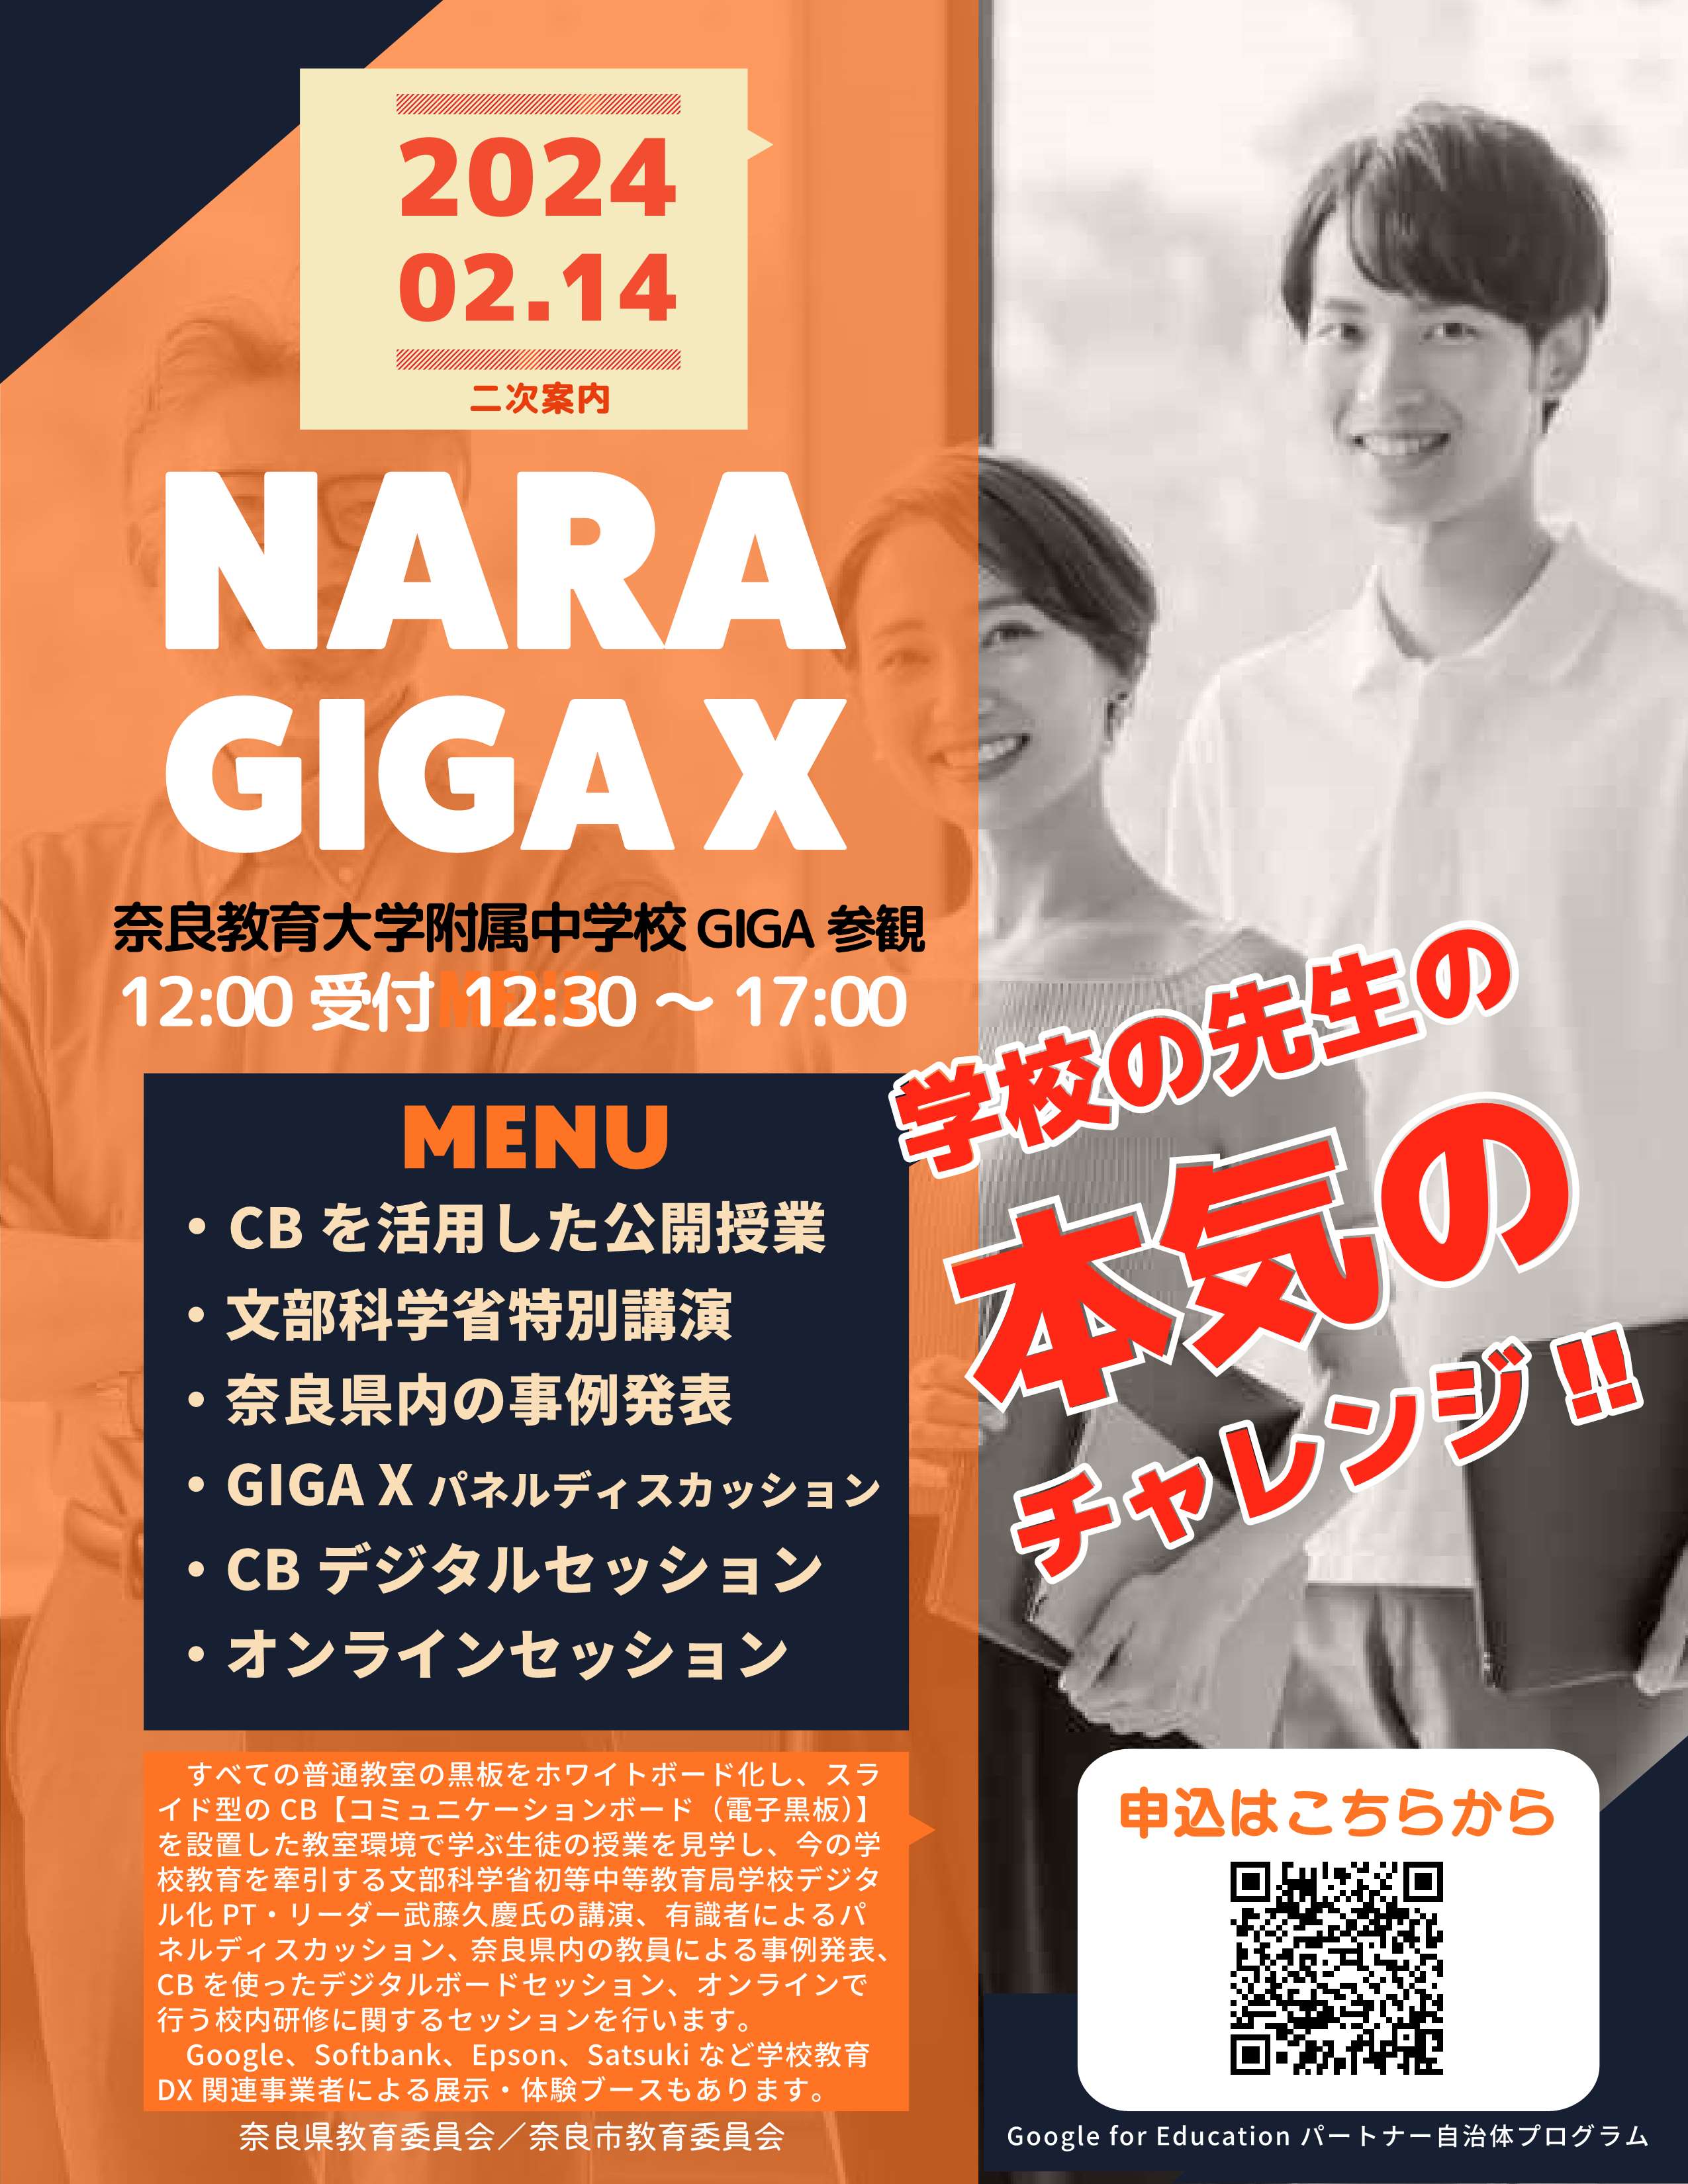 Nara GIGA-X 2024_Kk_1